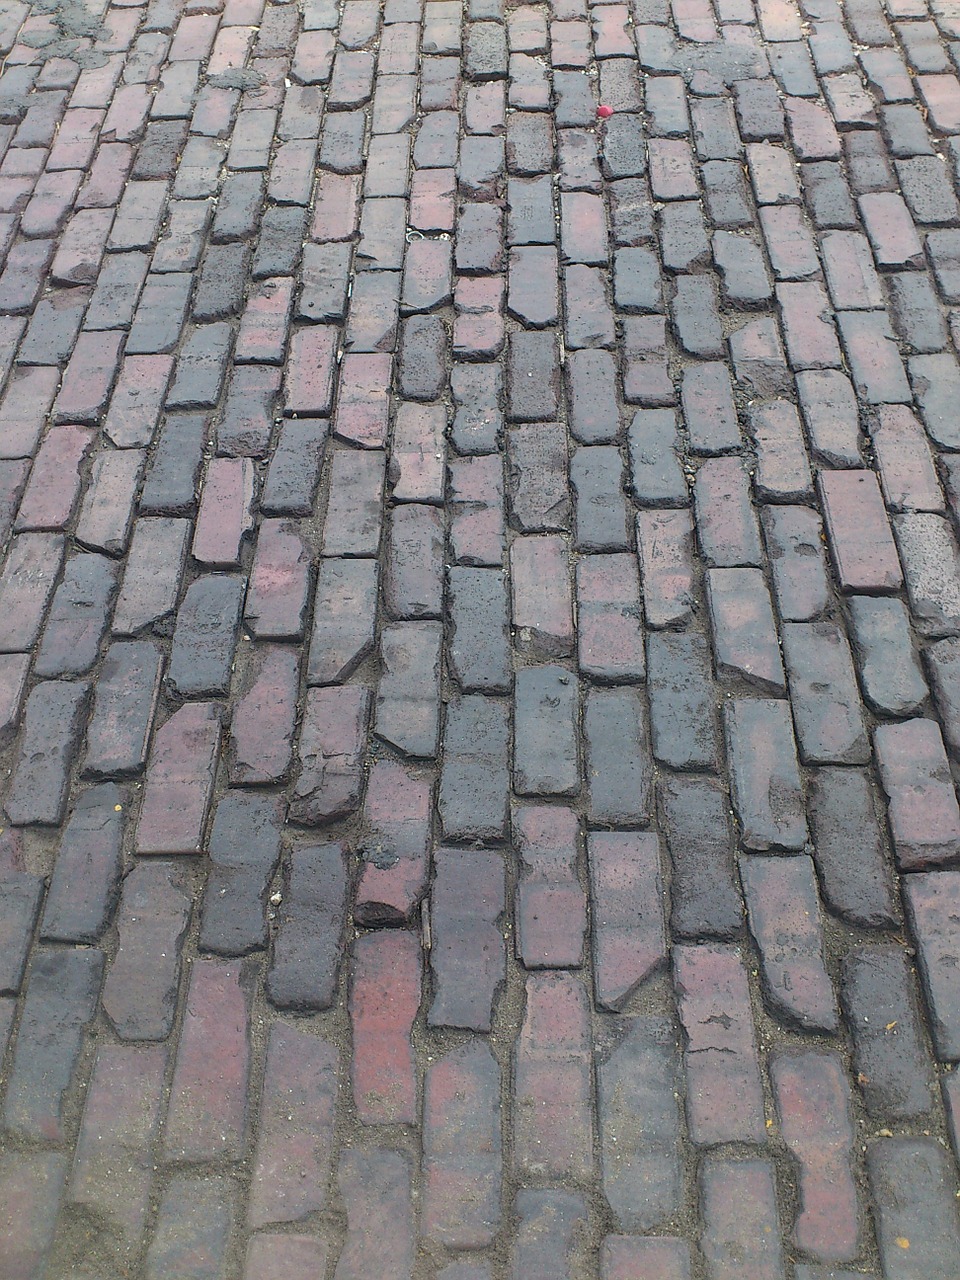 bricks pavement street free photo